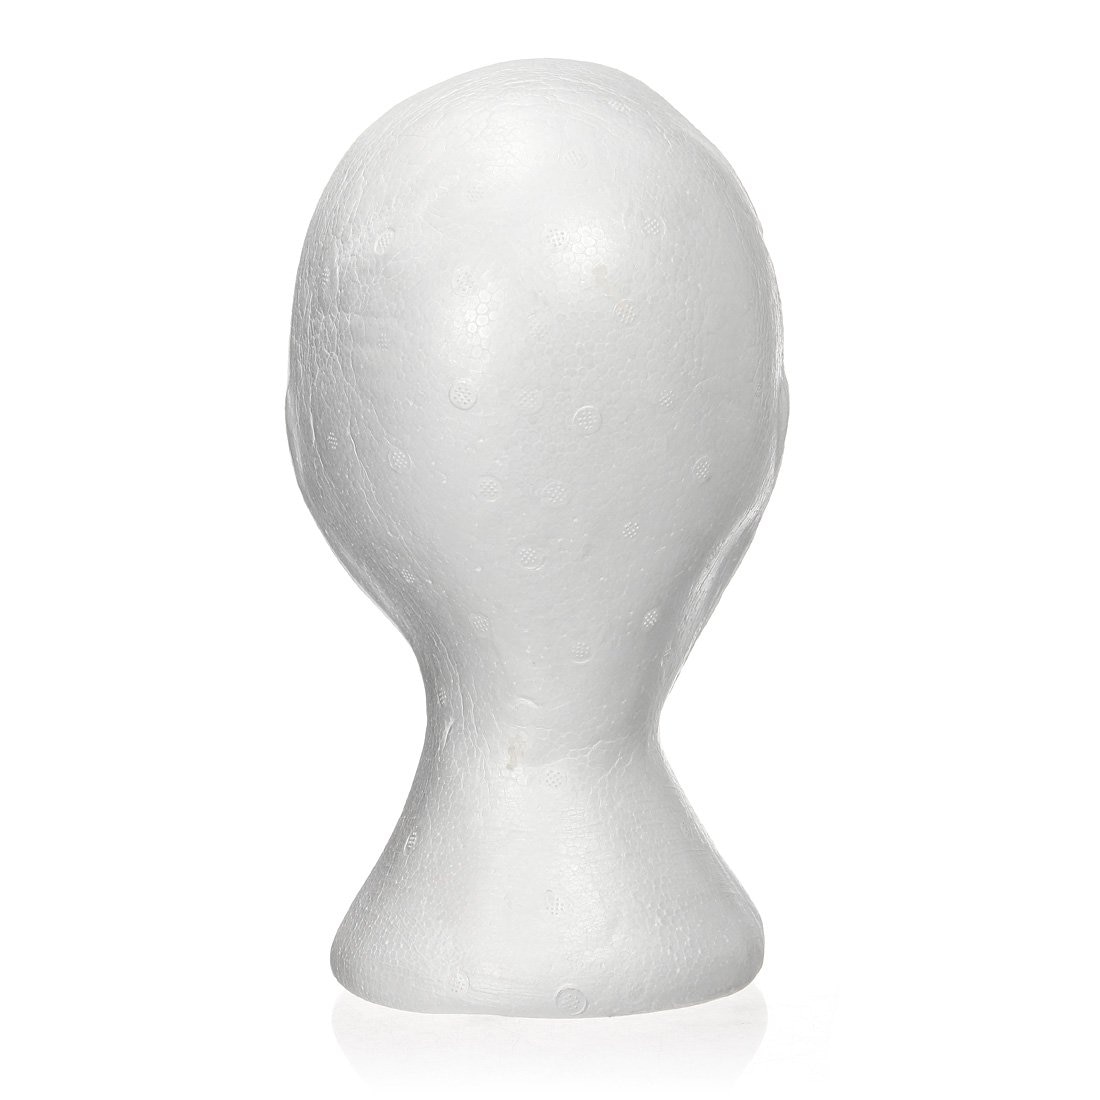 27.5x52 centimetri Manichino/mannequin Femminile testa di Schiuma (Polistirolo) Espositore per cap, cuffie, accessori per capelli e parrucche Donna Ma